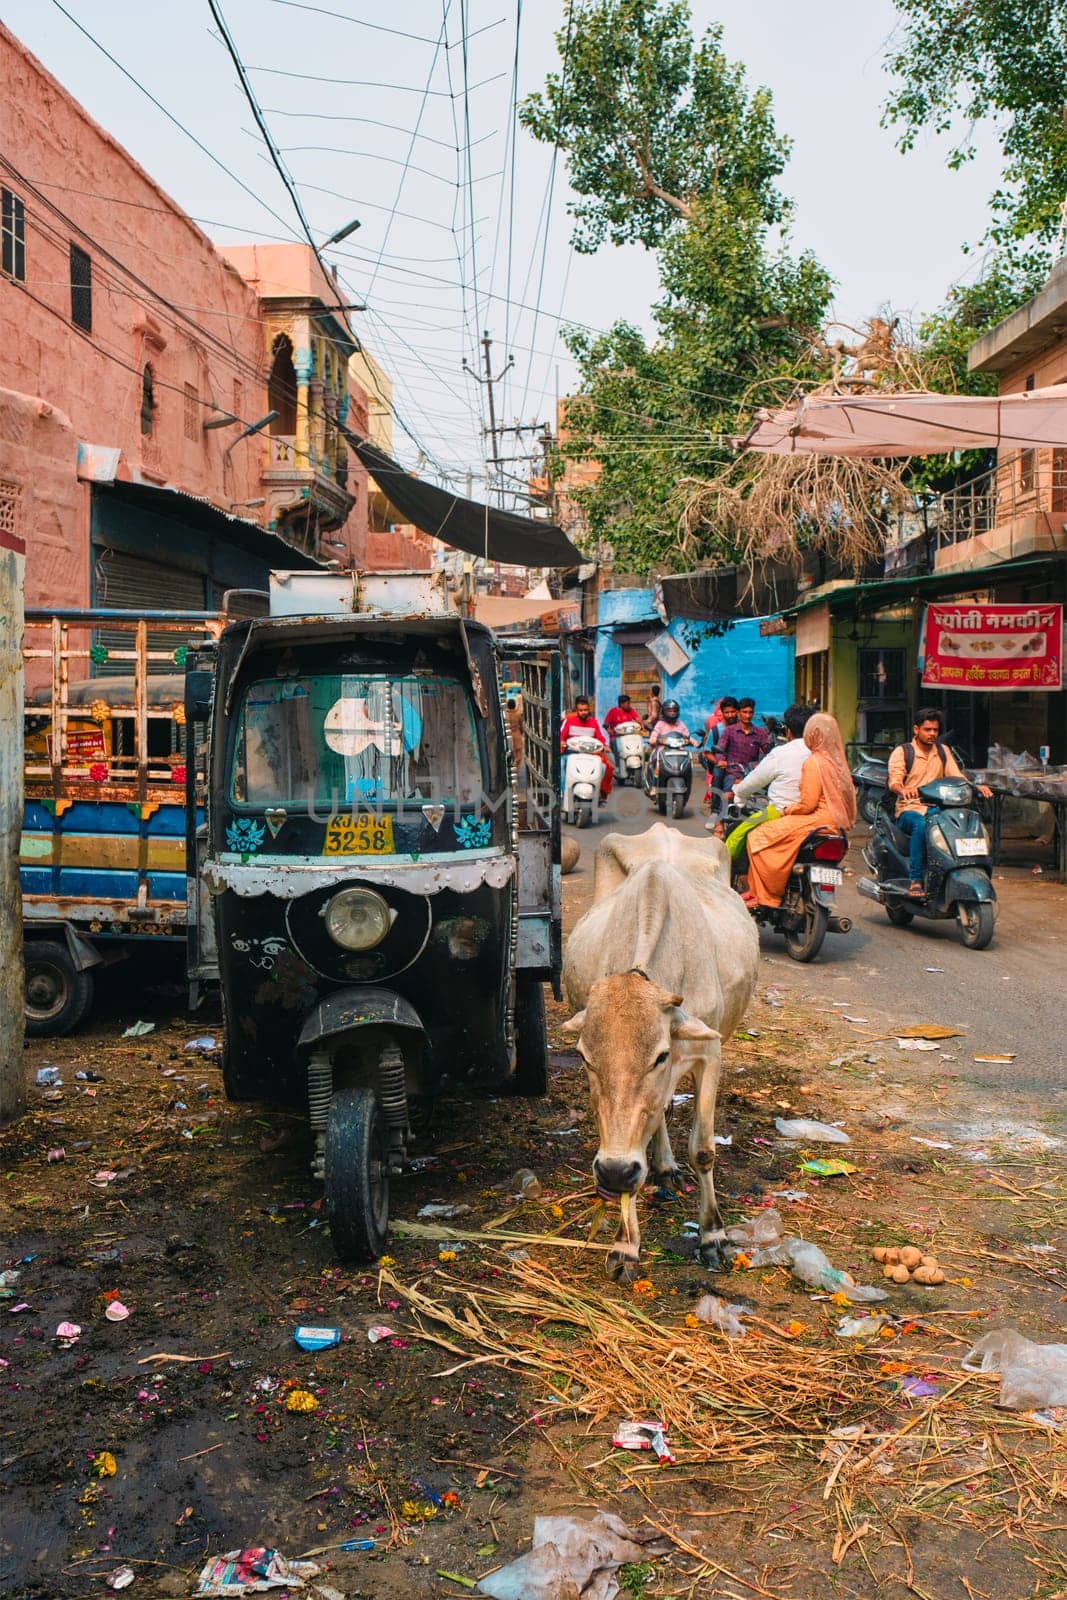 Indian street with auto rickshaw tuk tuk, cow and motorcycles. Jodhpur, Rajasthan, India by dimol